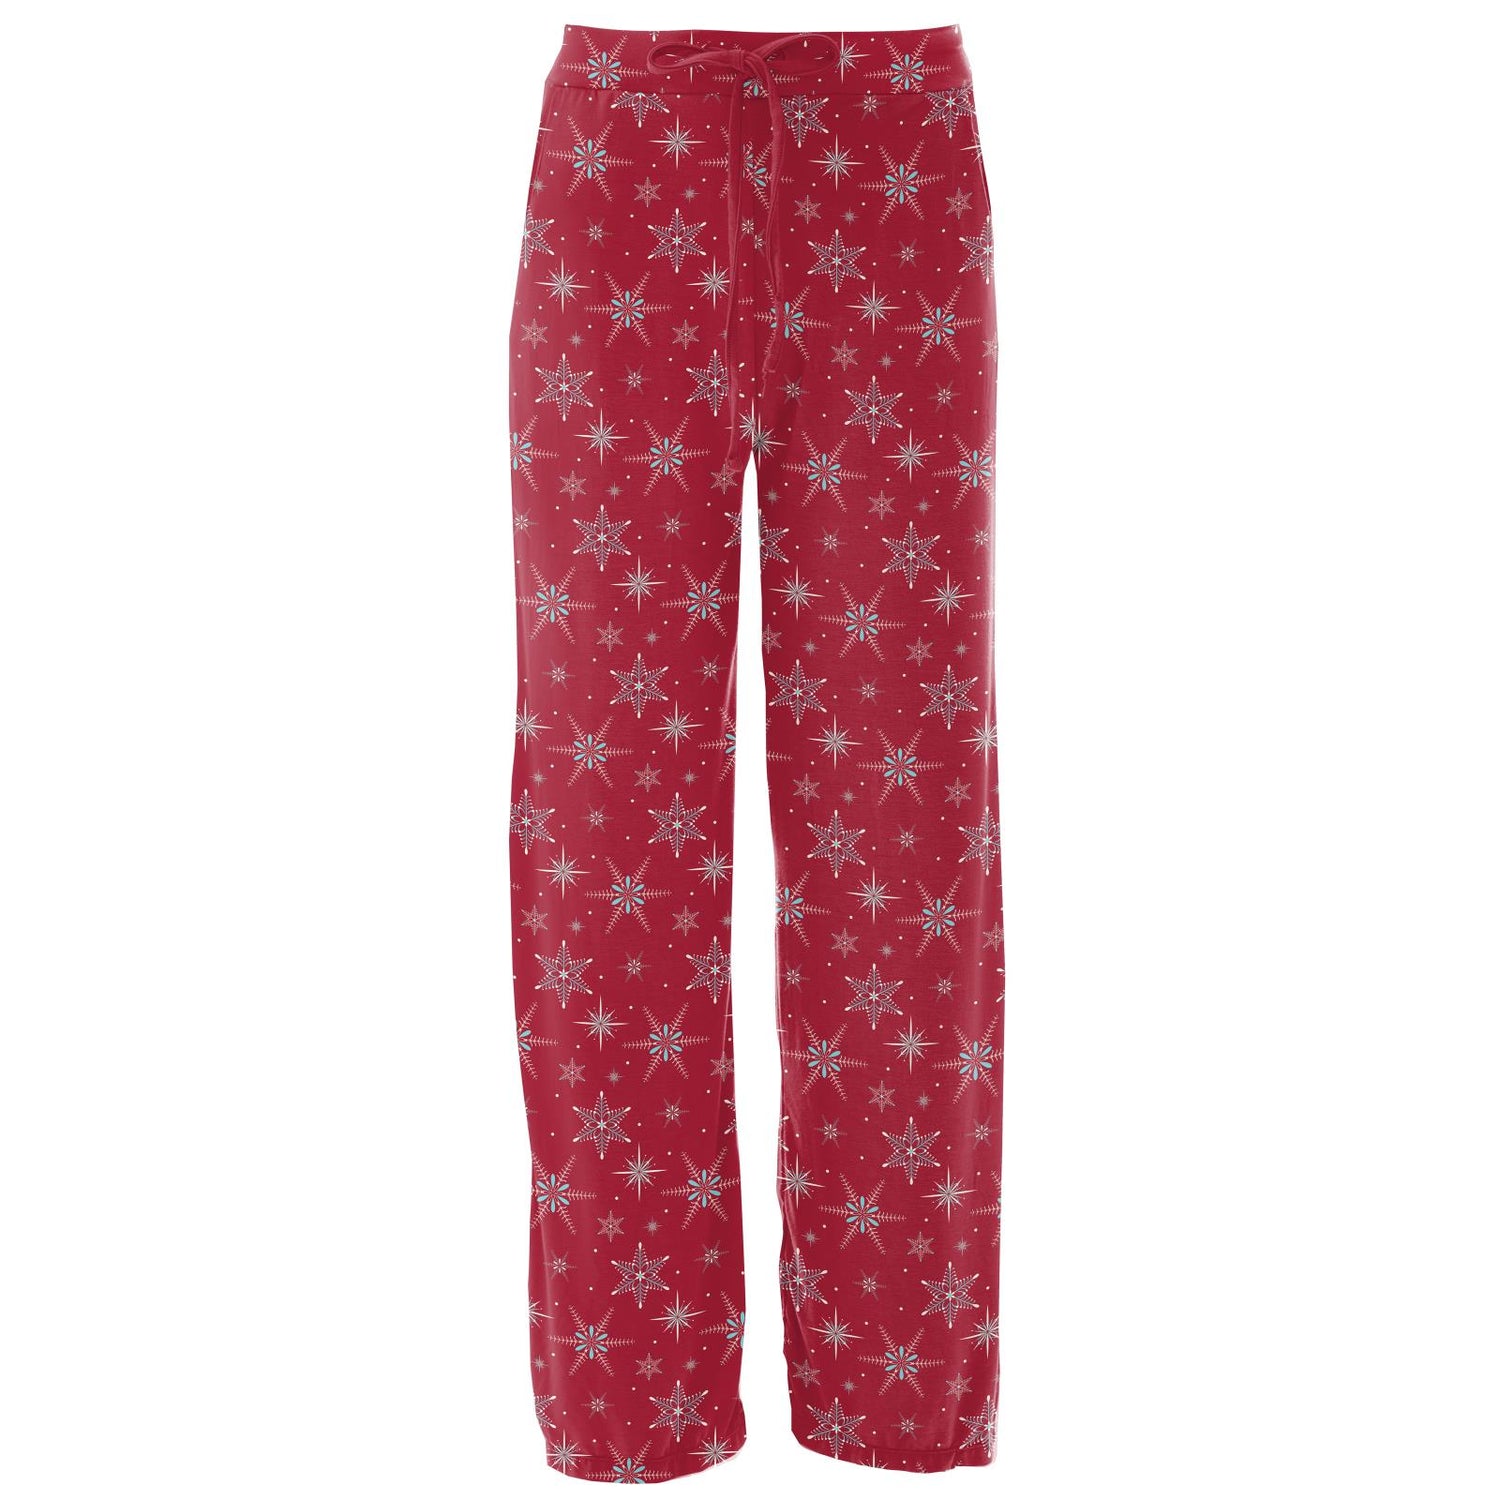 Women's Print Lounge Pants in Crimson Snowflakes